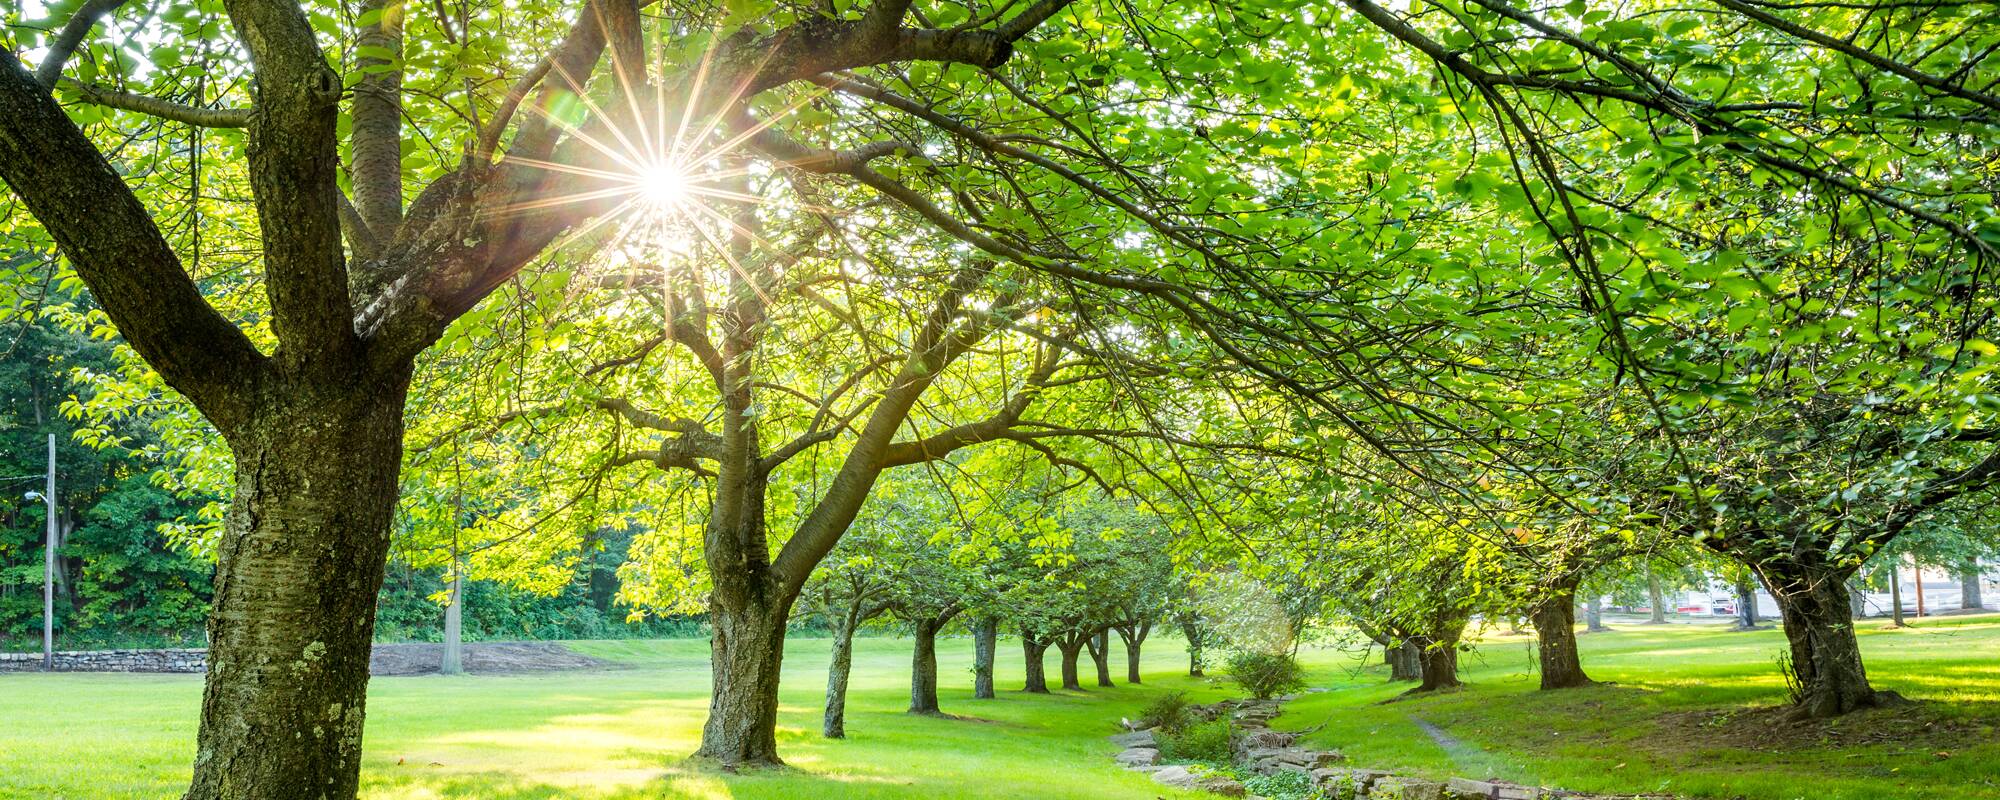 Row of trees in sunlight